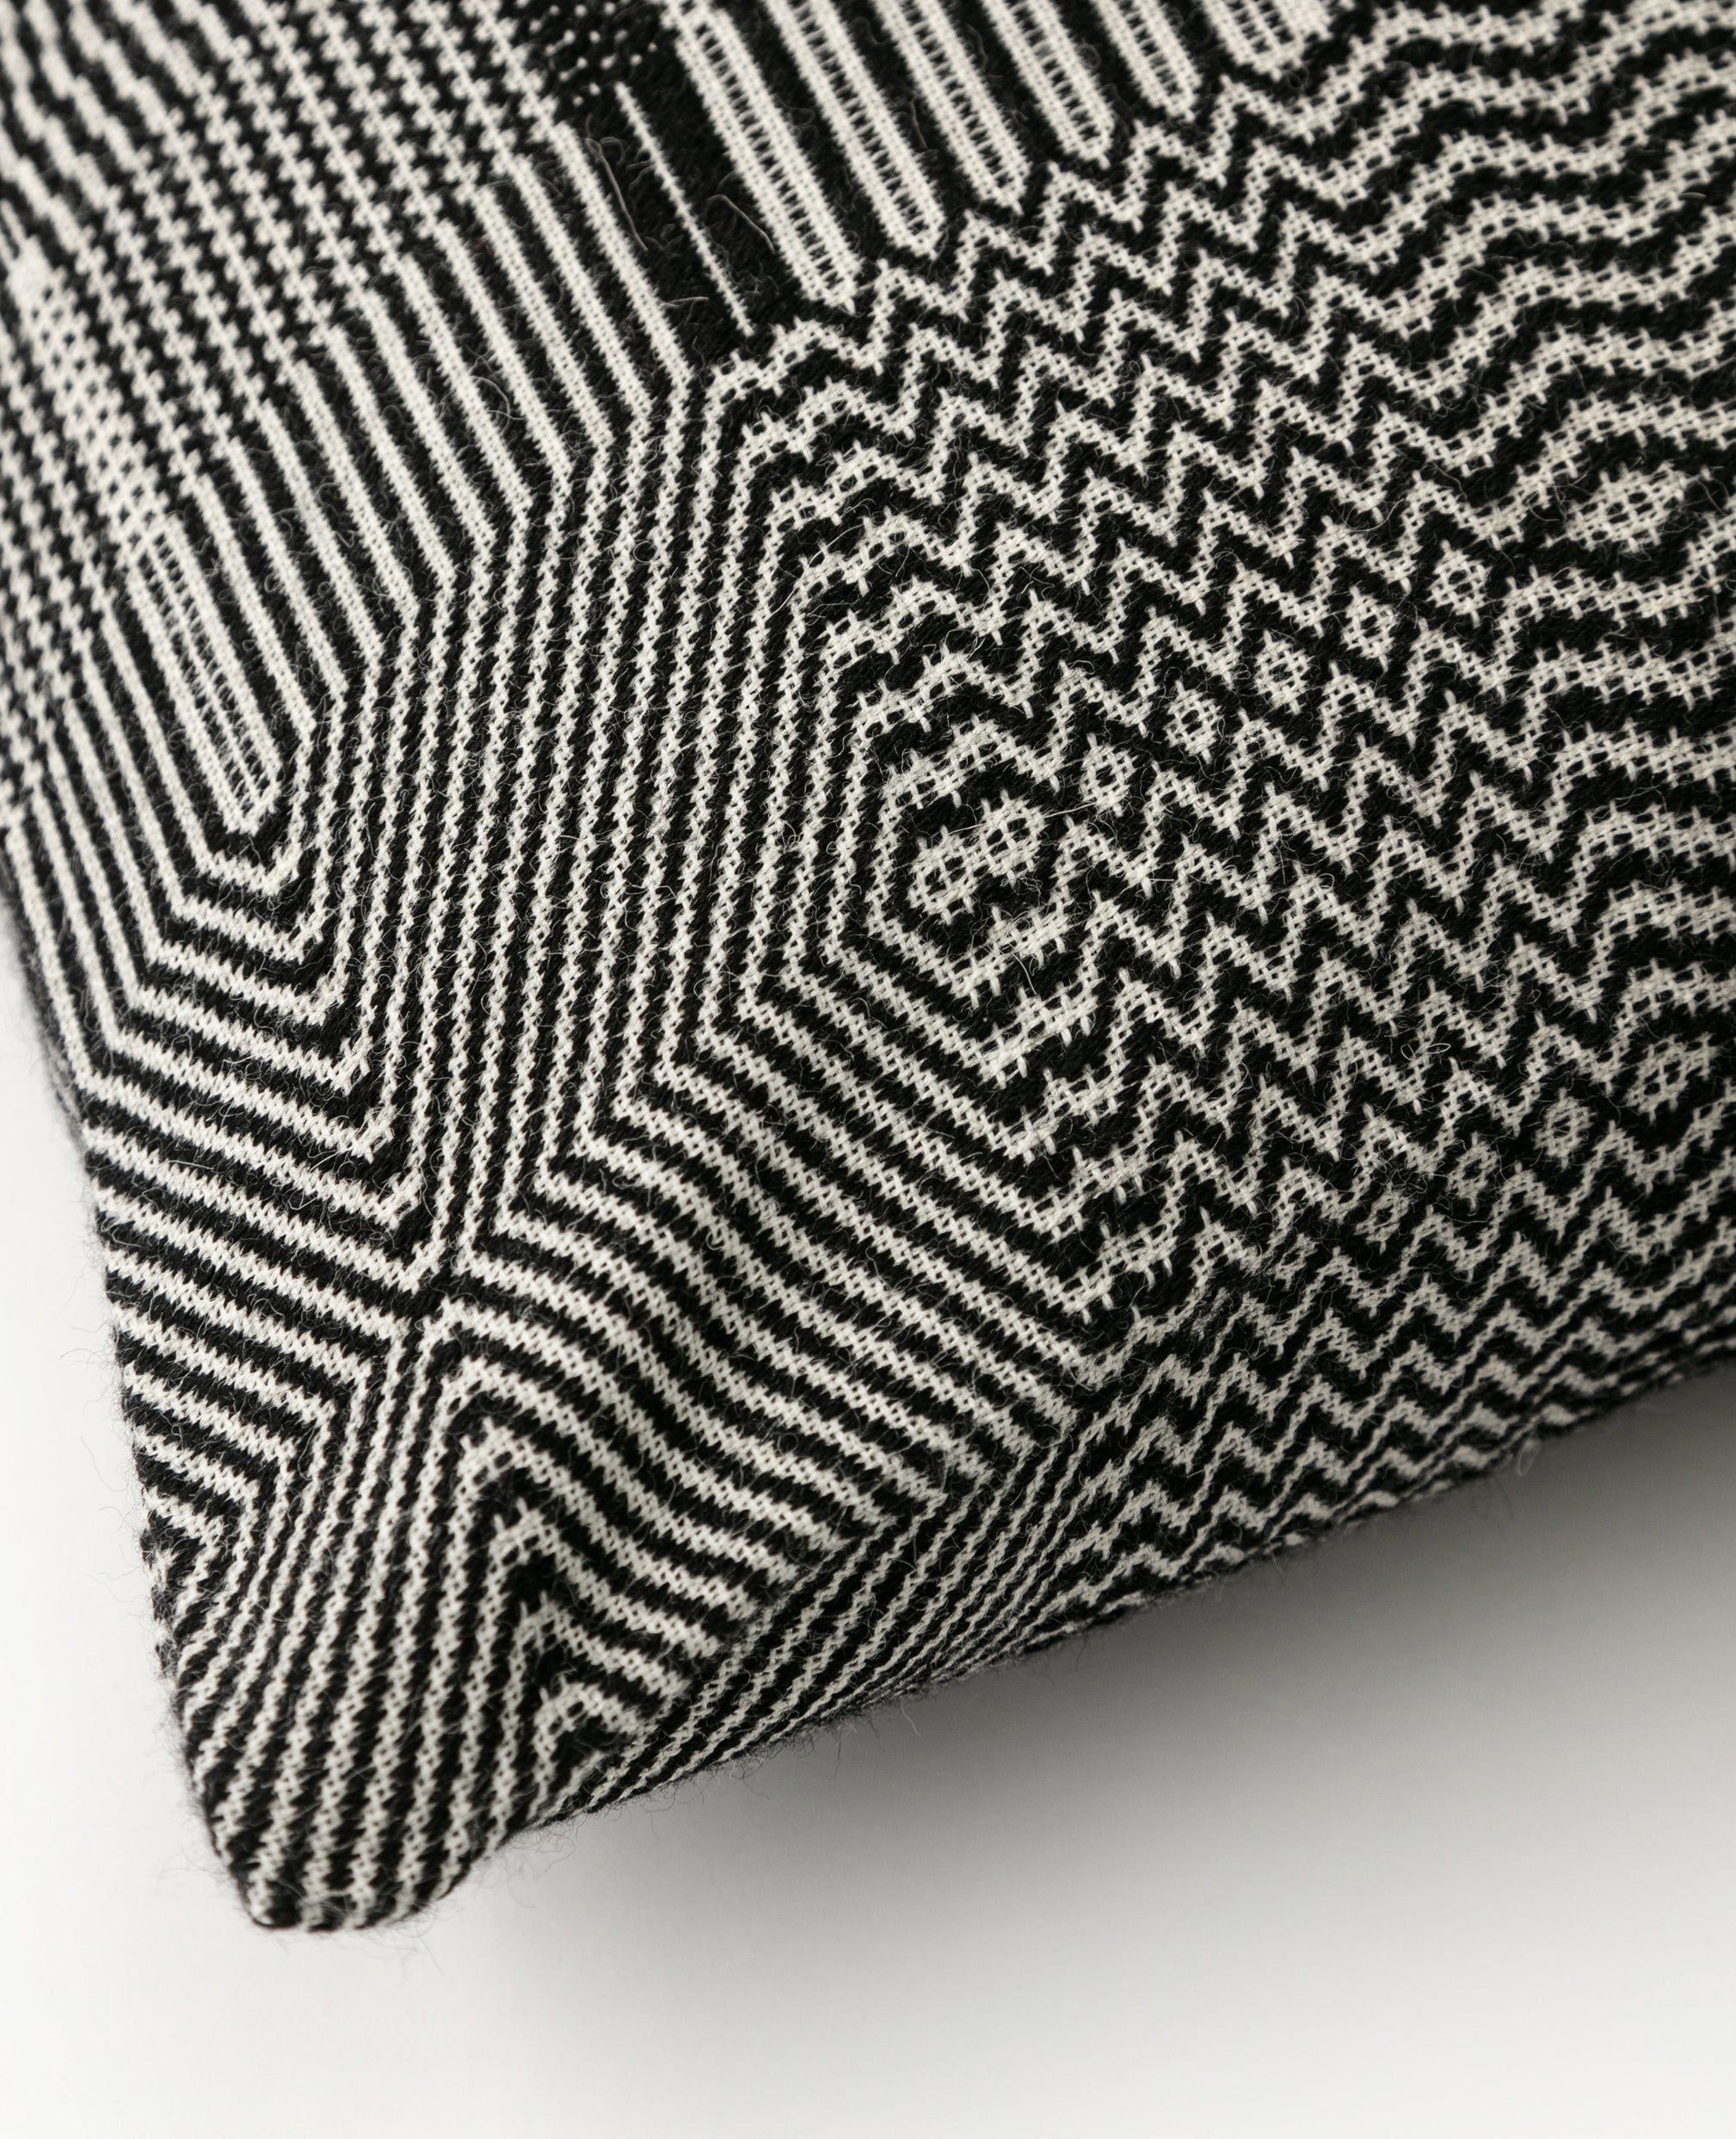 Vaeven Vandre overshot cushion detail